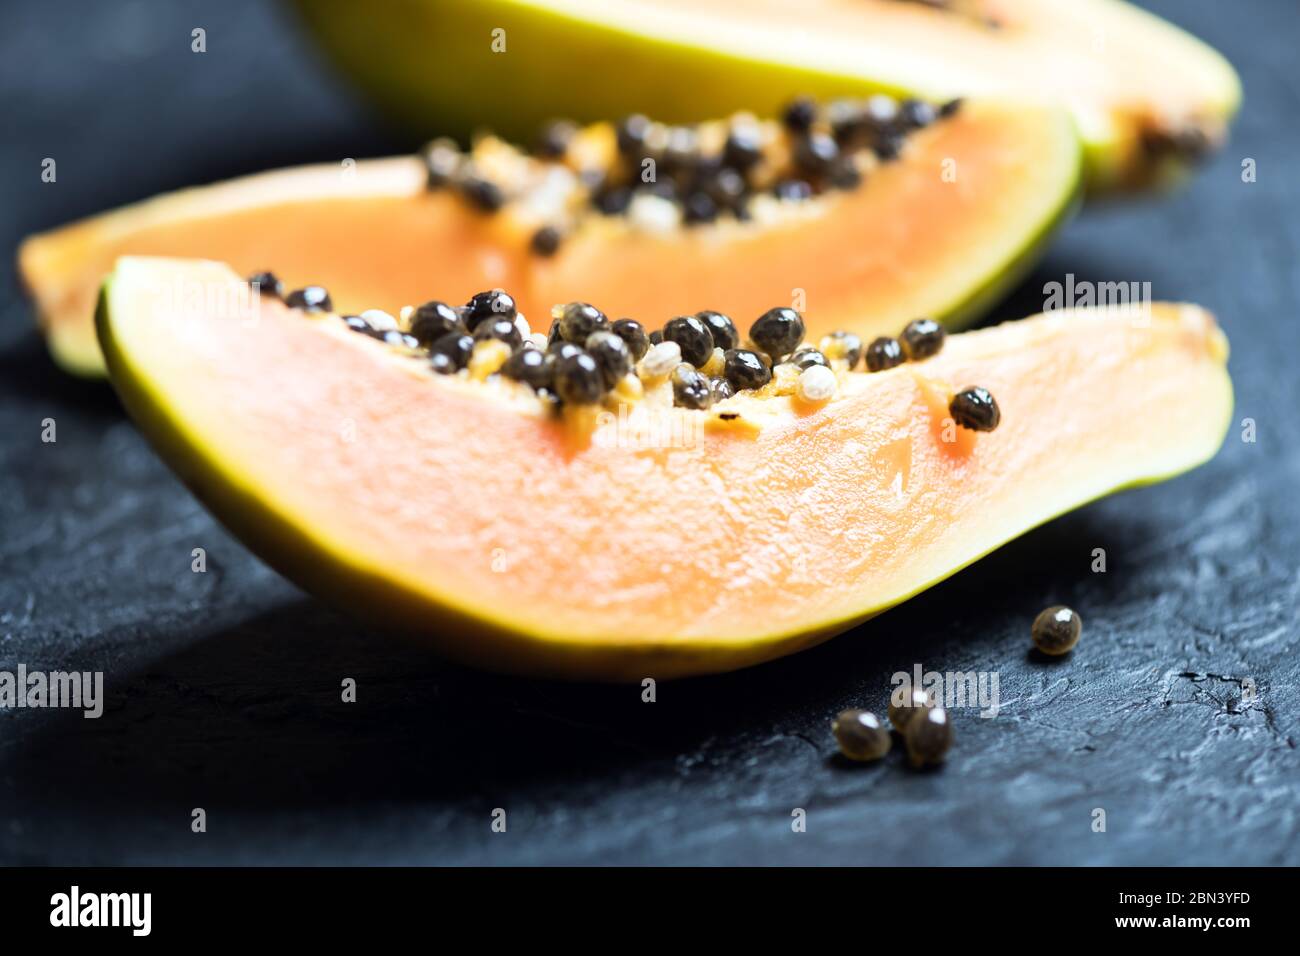 Slised papaya with silver spoon on black concrete background. Food photography Stock Photo